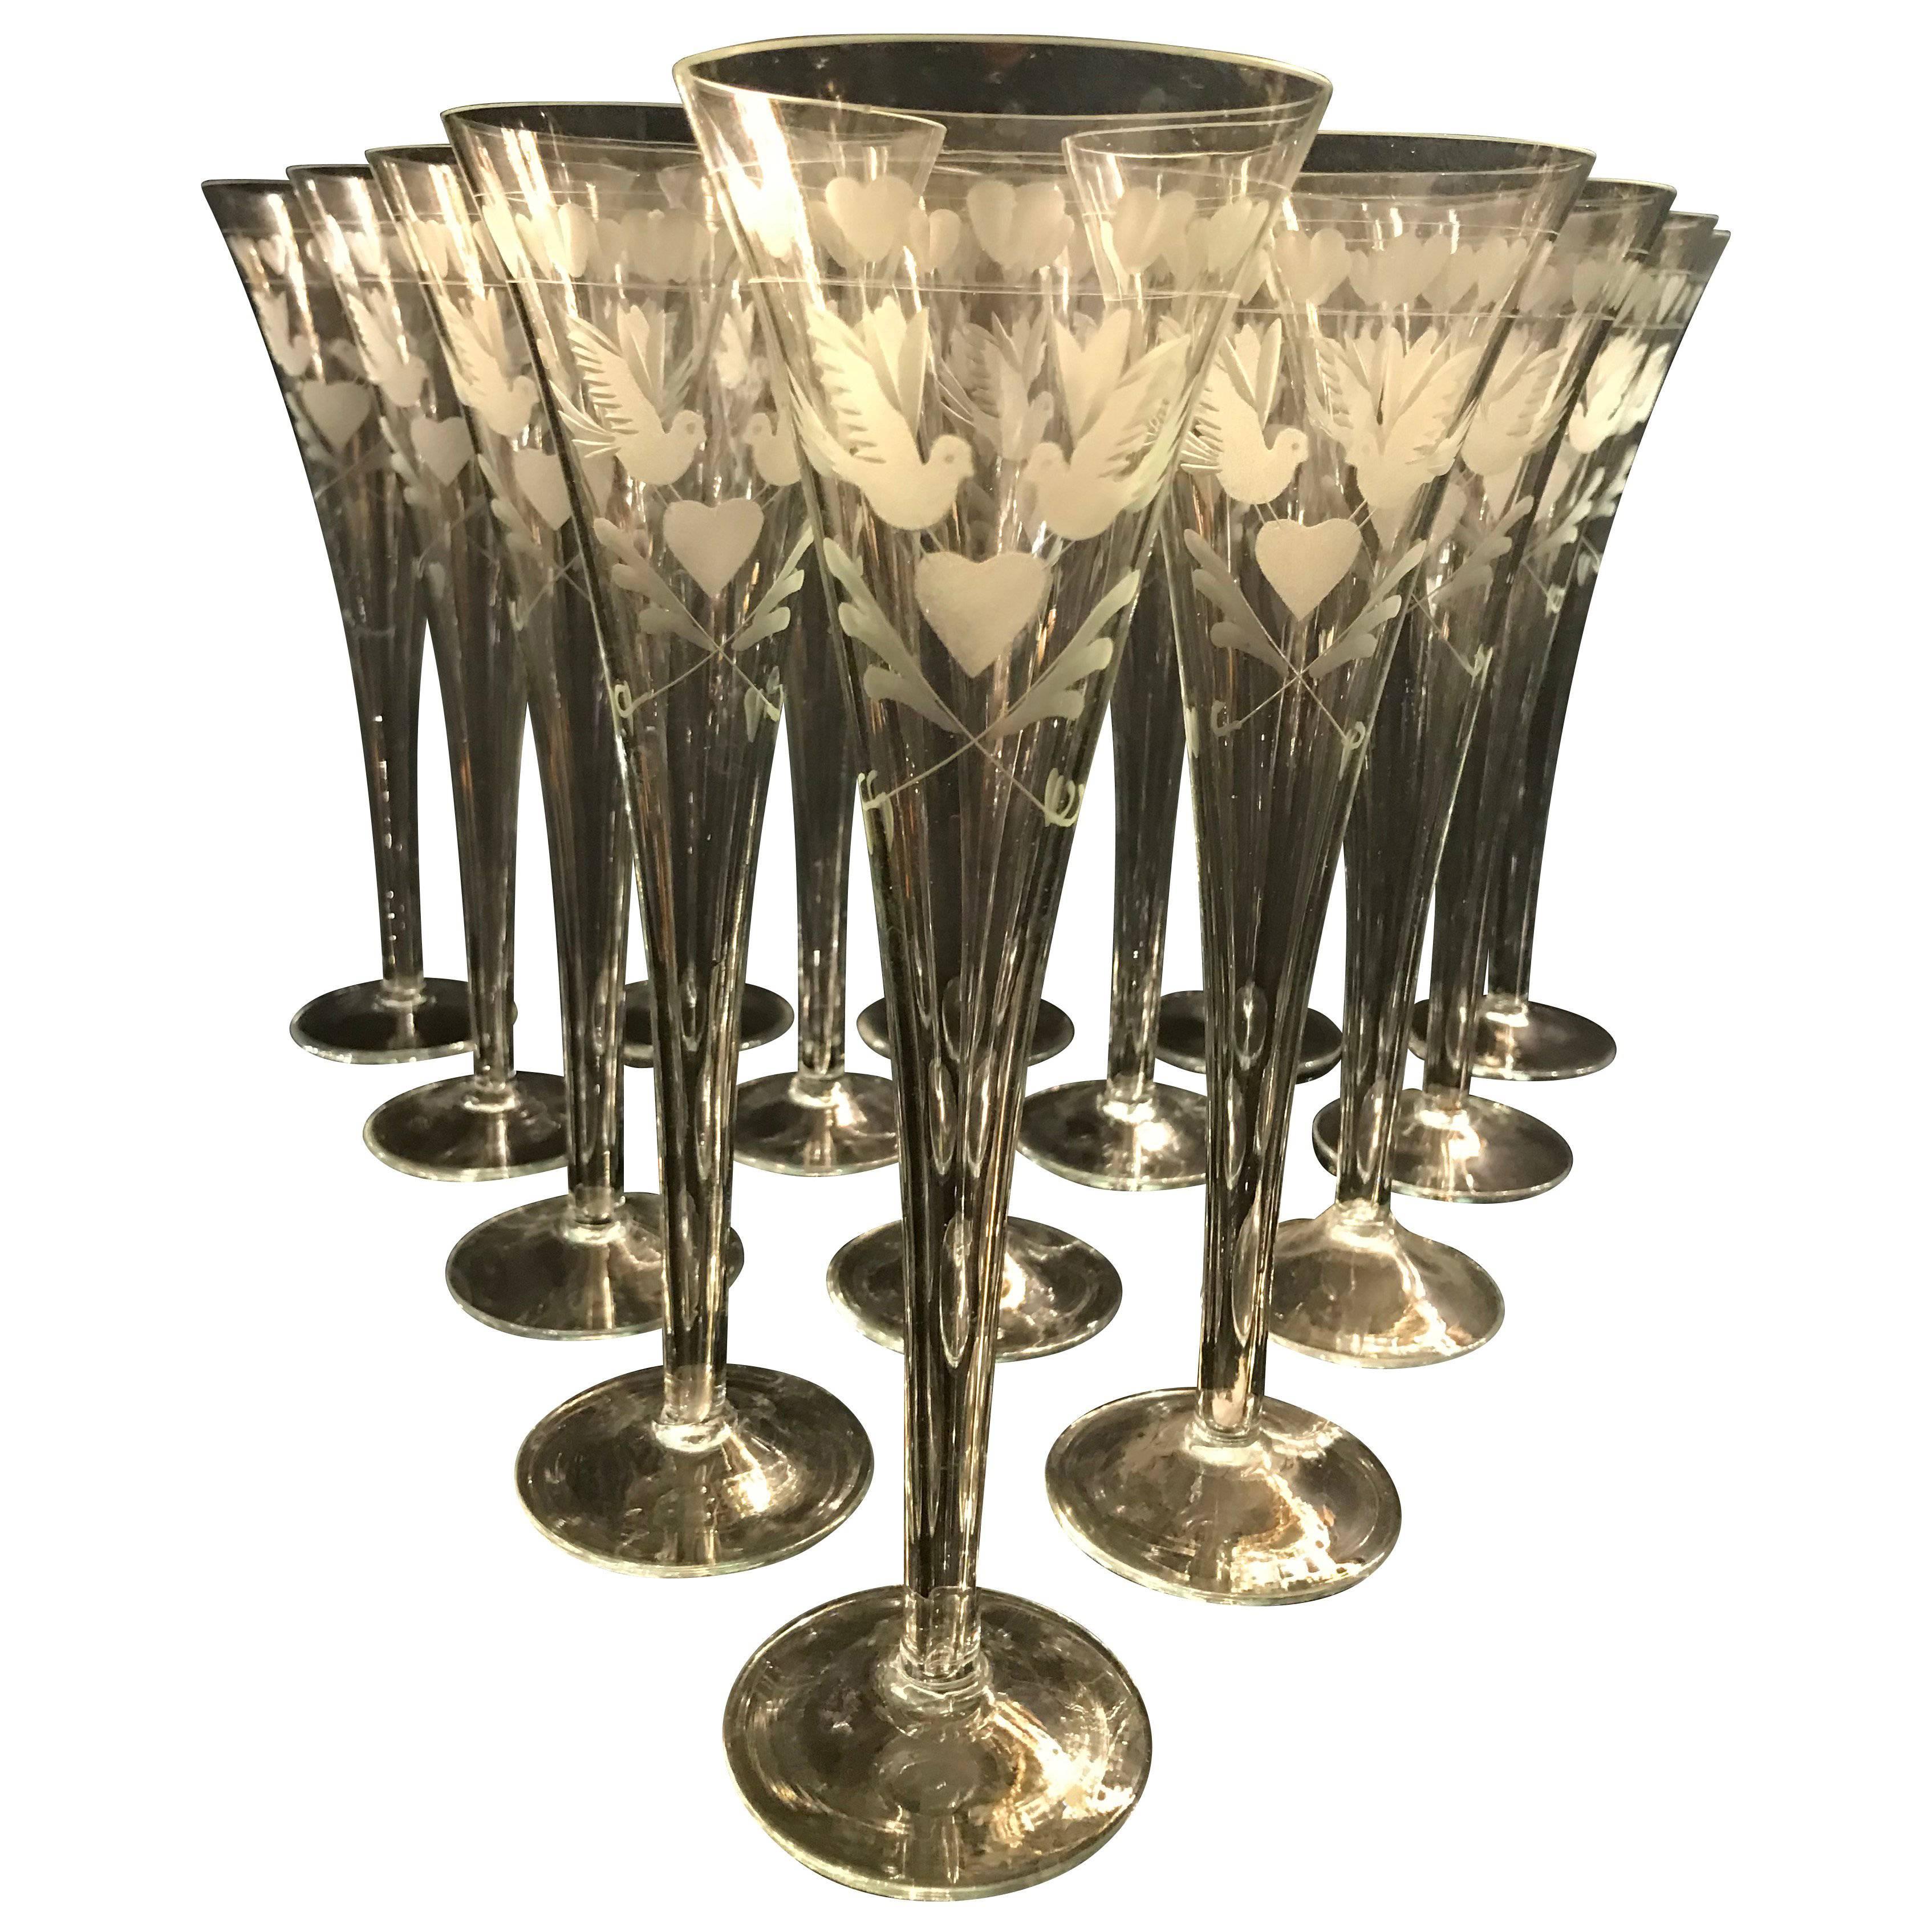 Vintage French Engraved Champagne Flutes